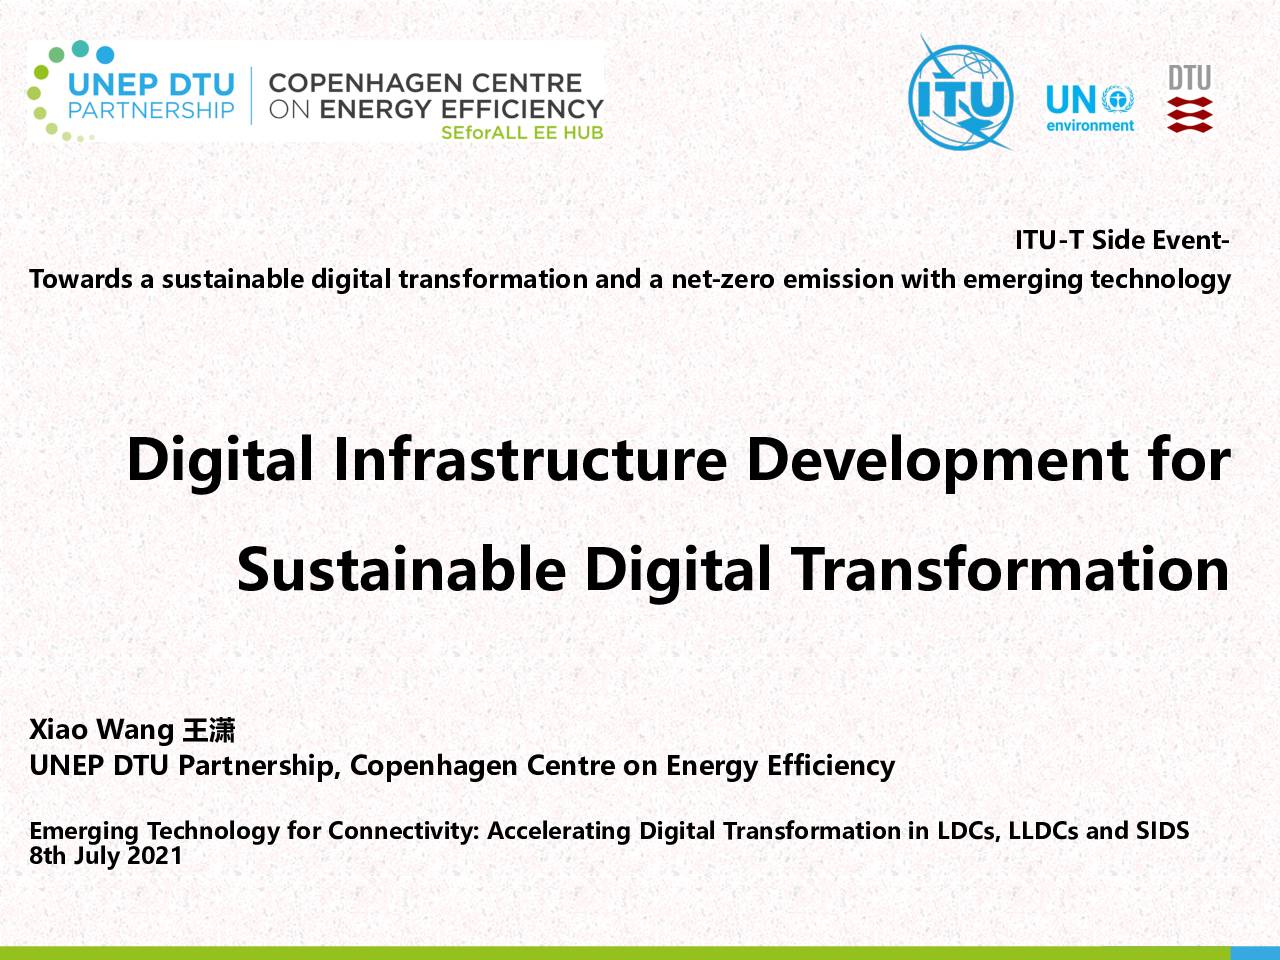 Digital Infrastructure Development for Sustainable Digital Transformation (Presentation)